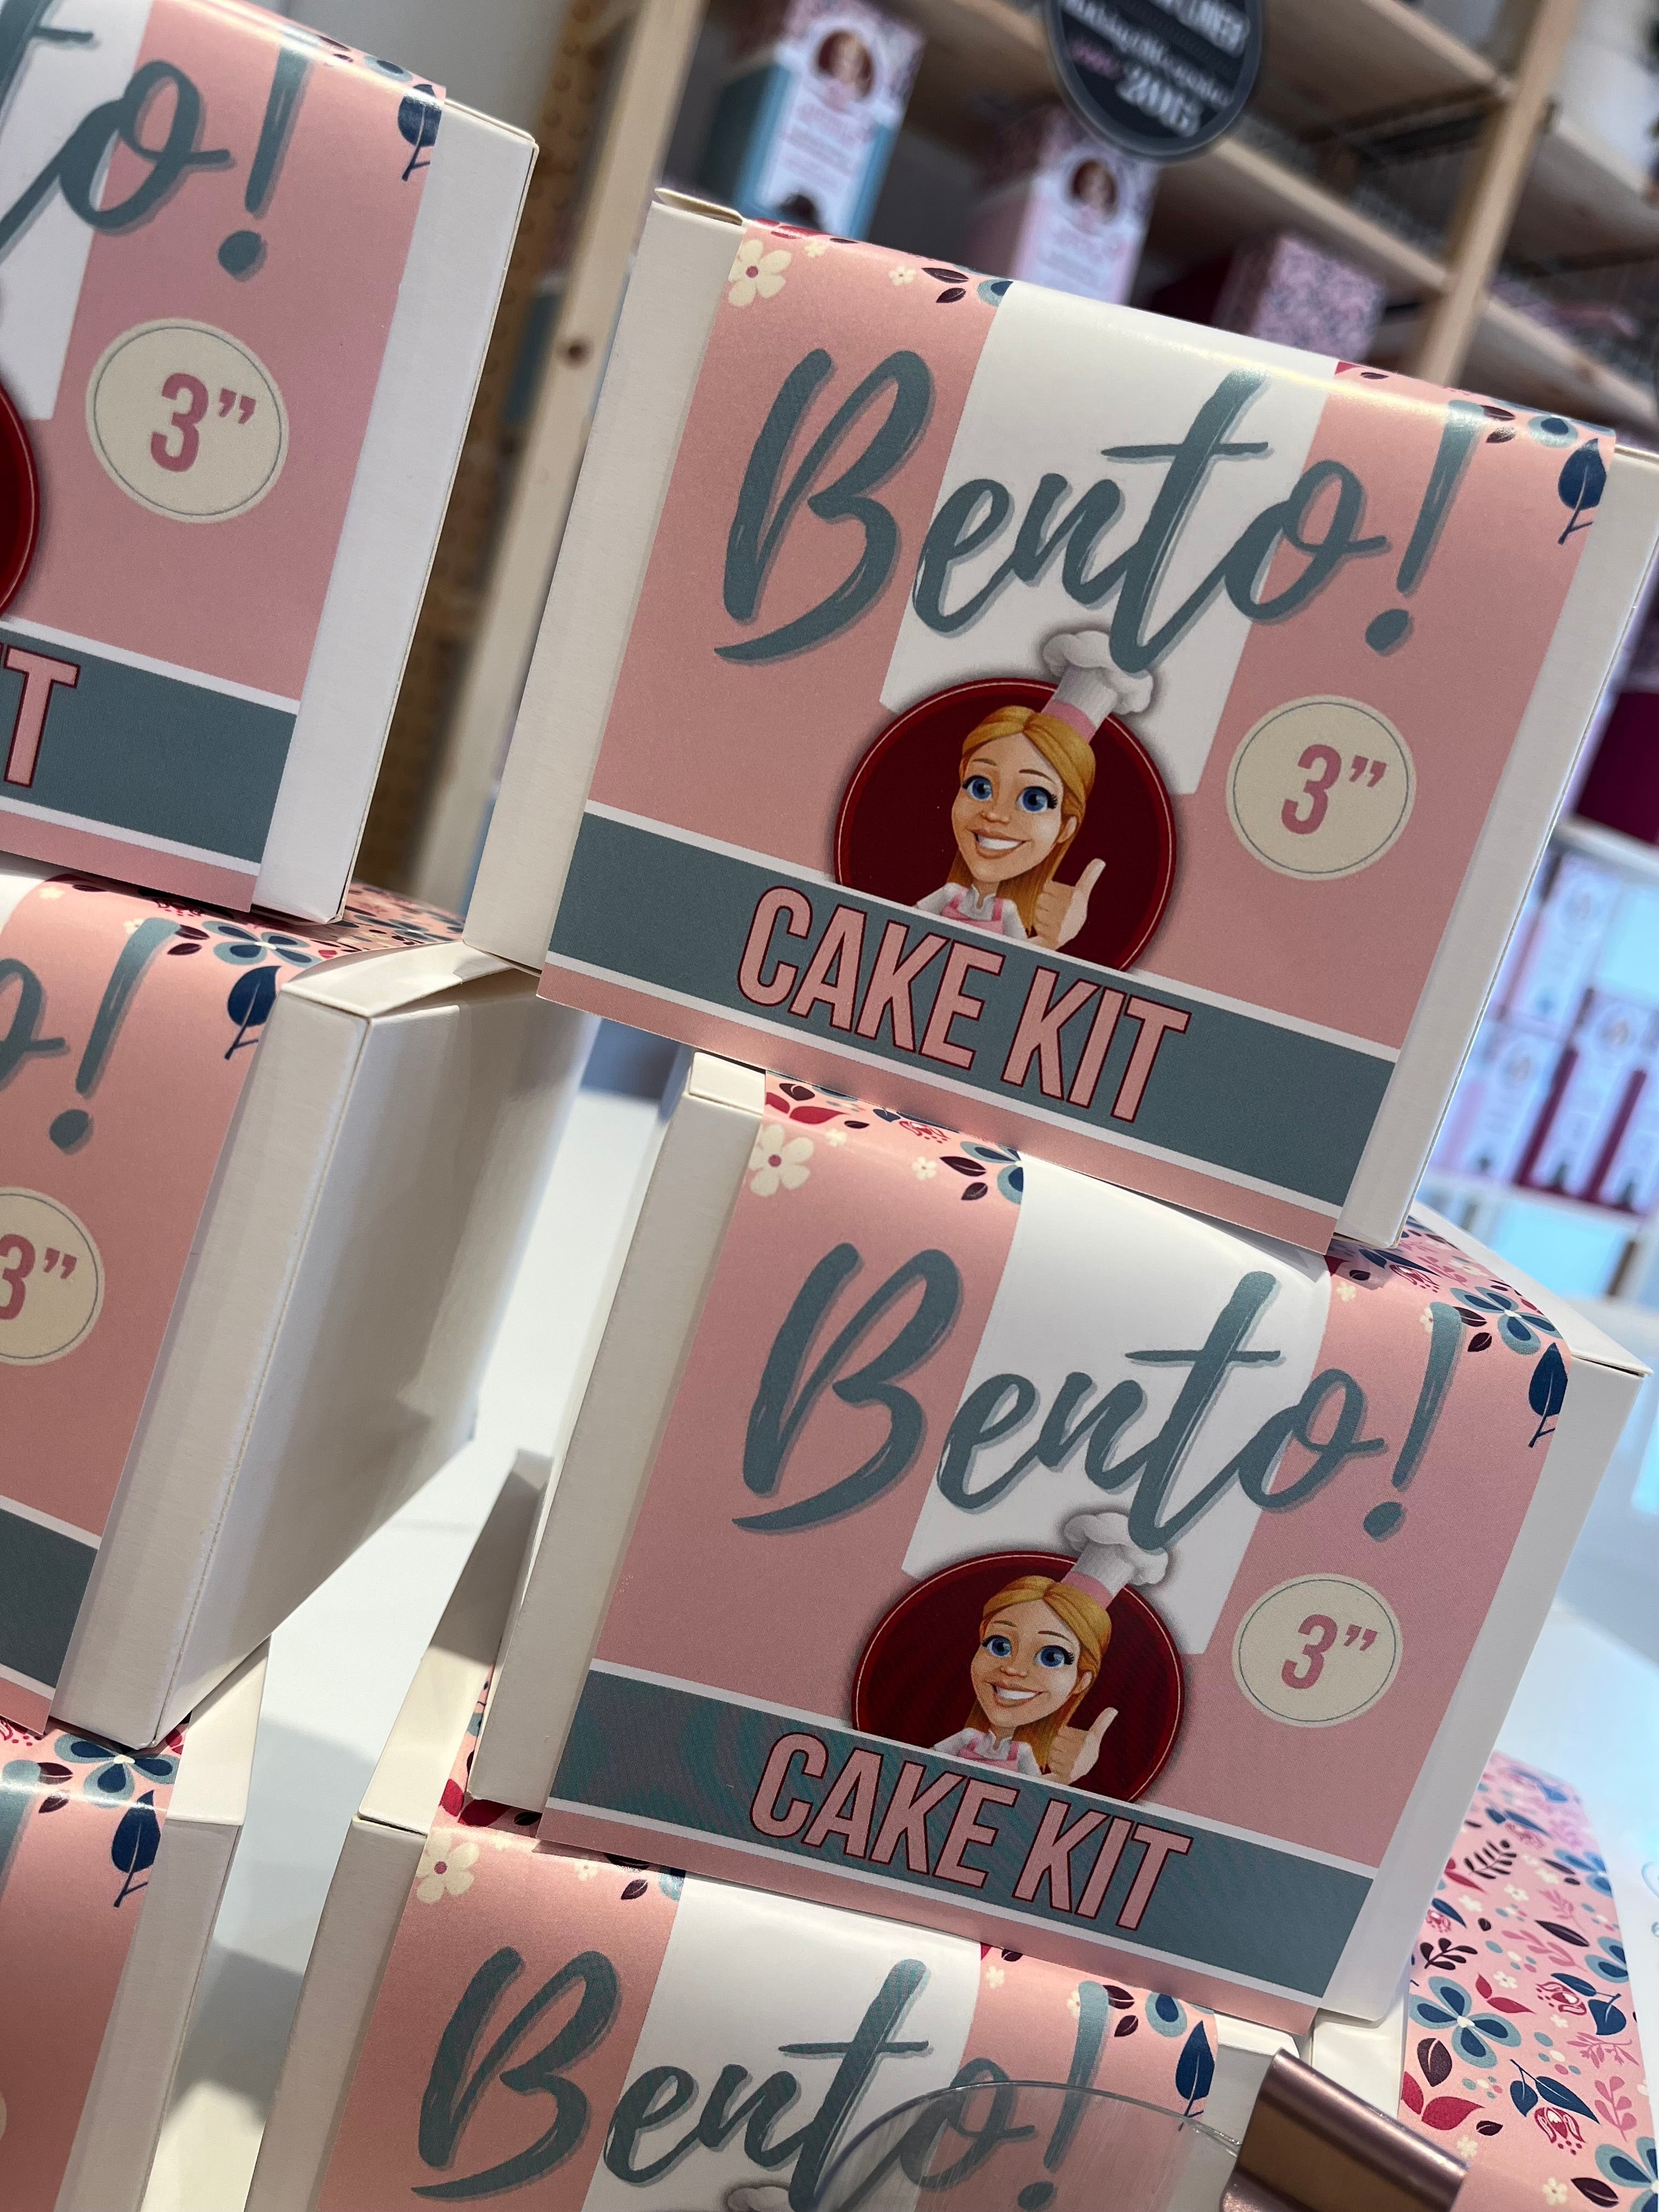 3" Bento Cake Kit